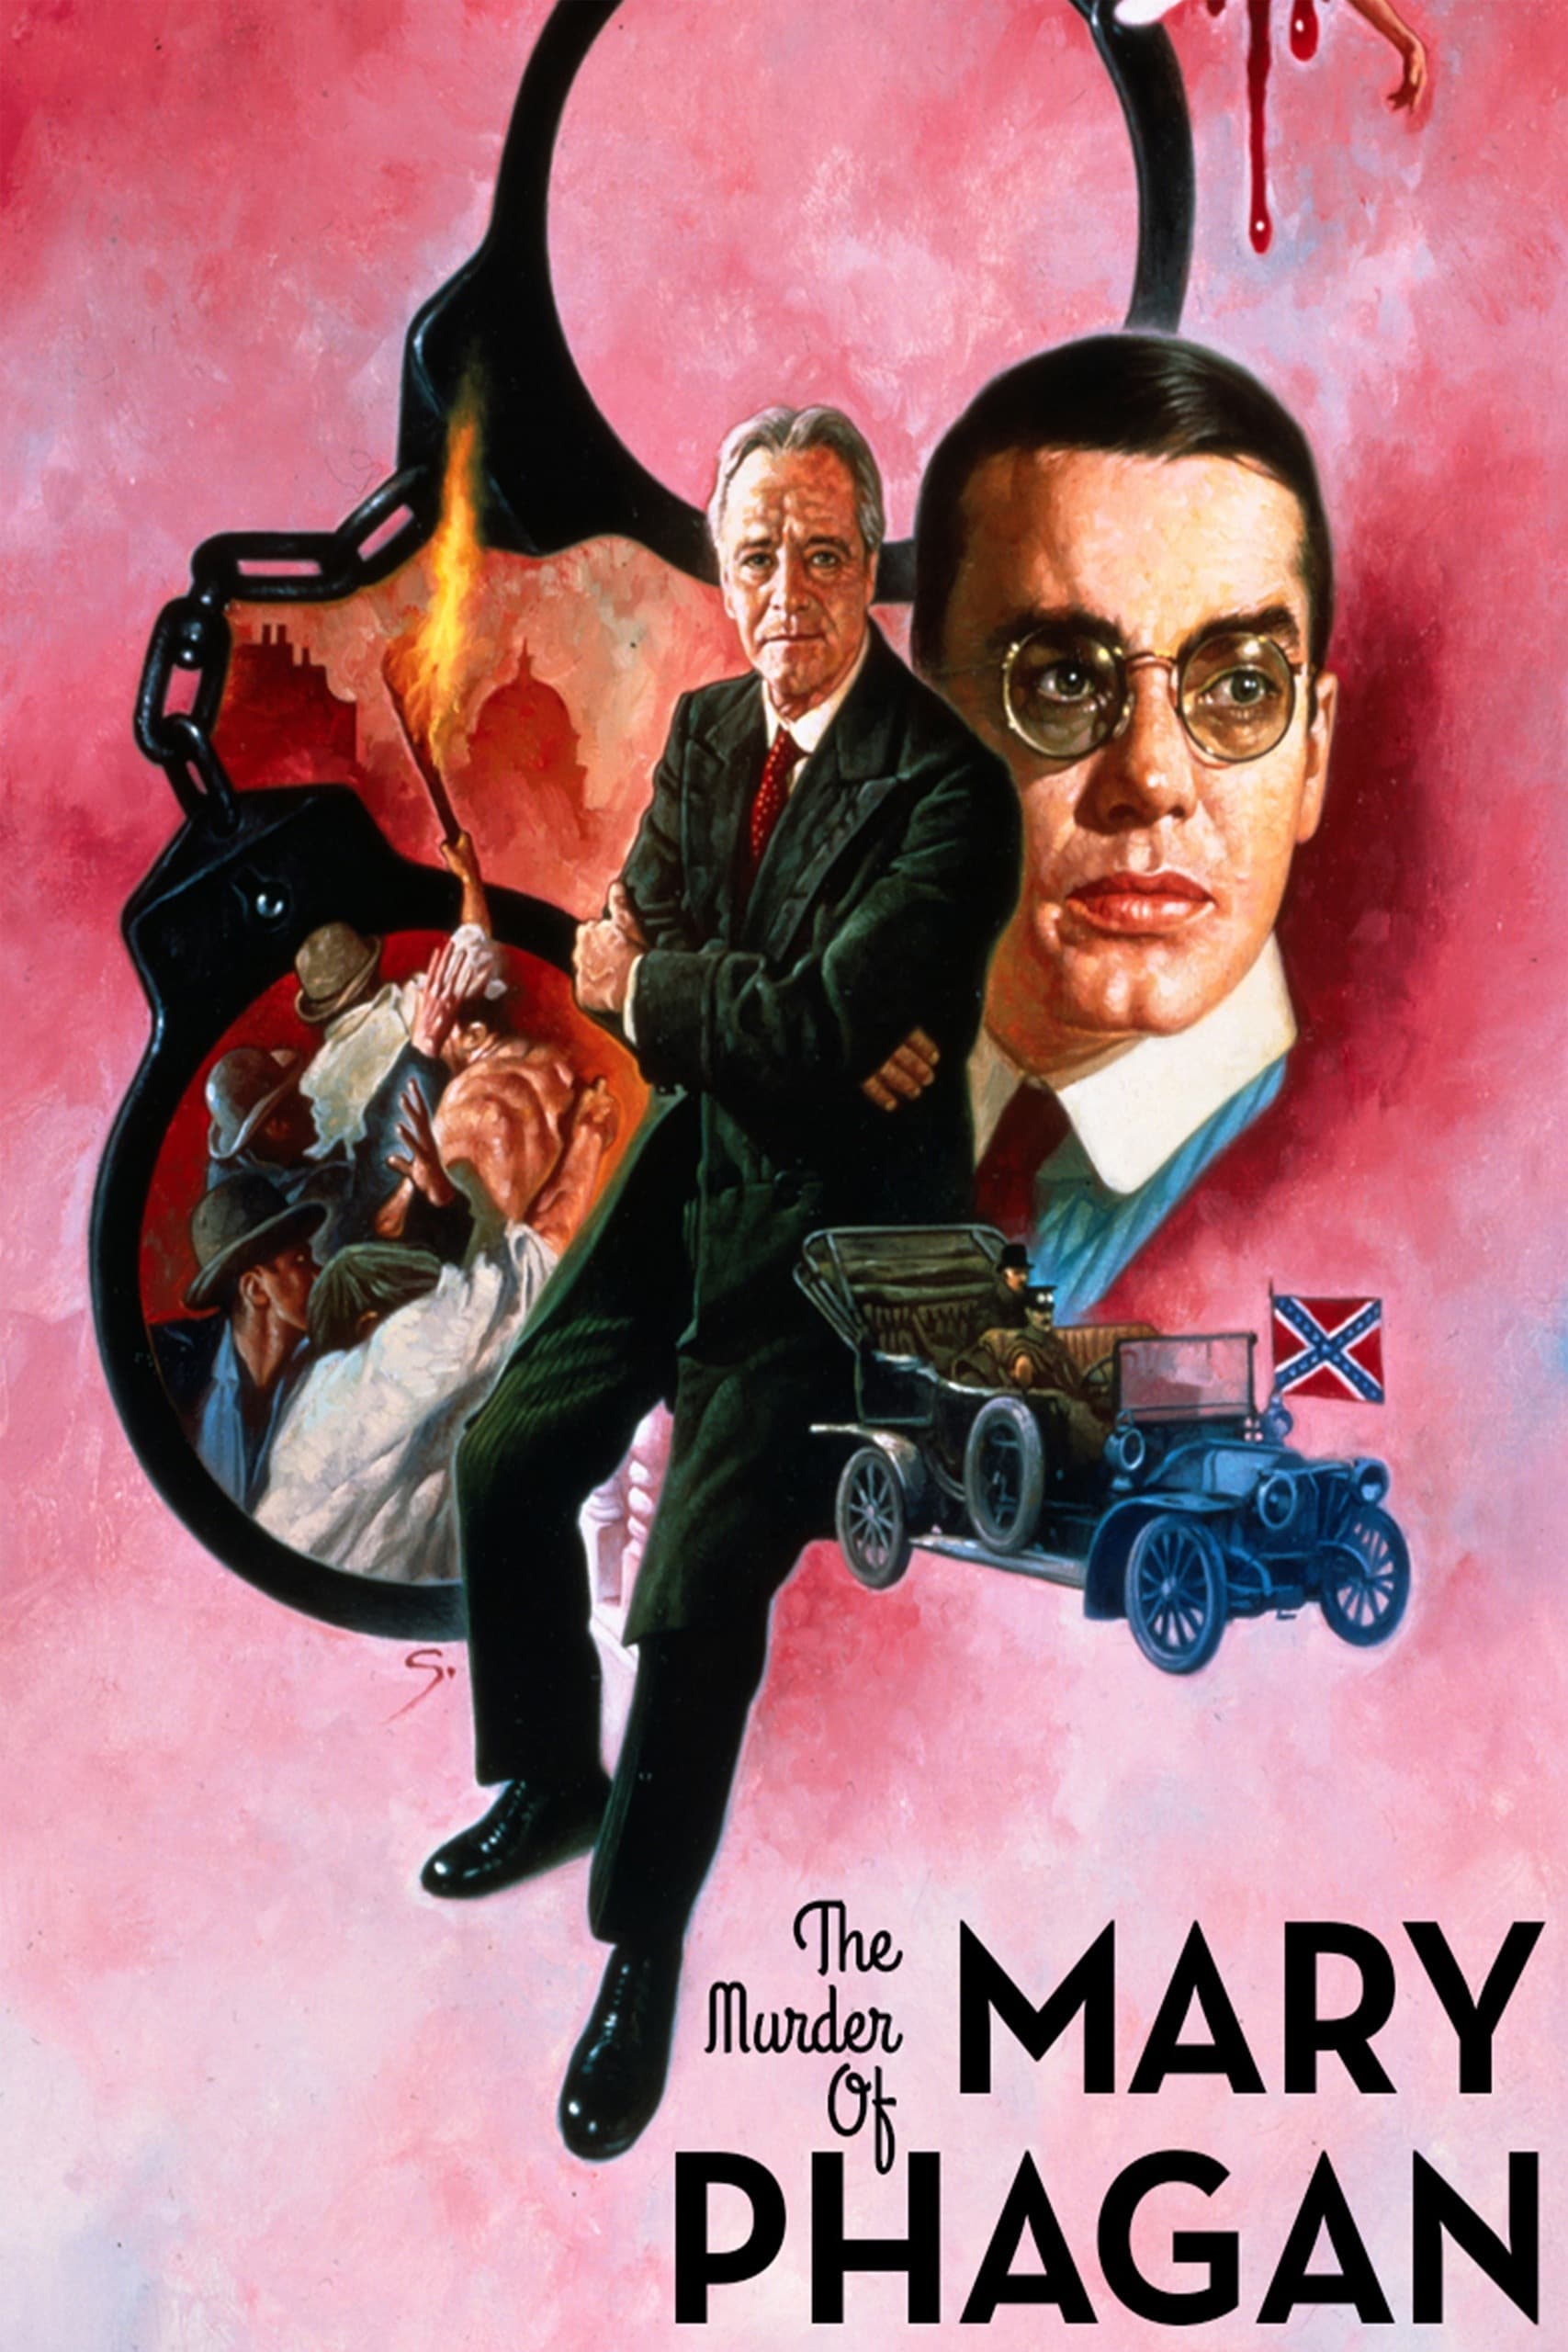 The Murder of Mary Phagan (1988)